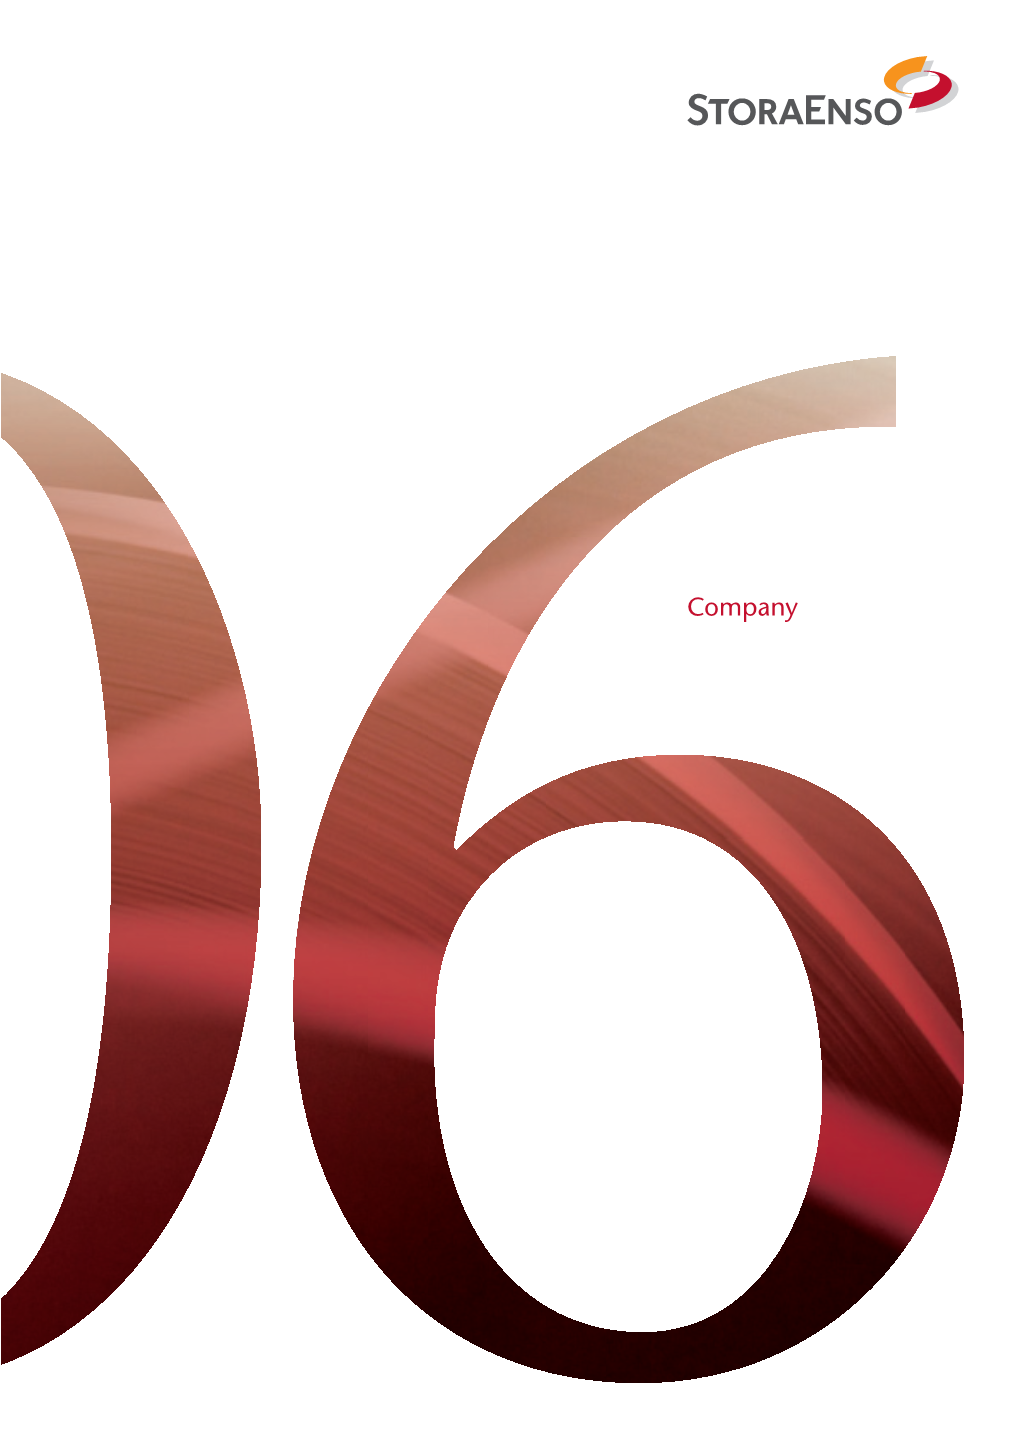 Company Stora Enso’S Annual Report 2006 Comprises Three Separate Booklets